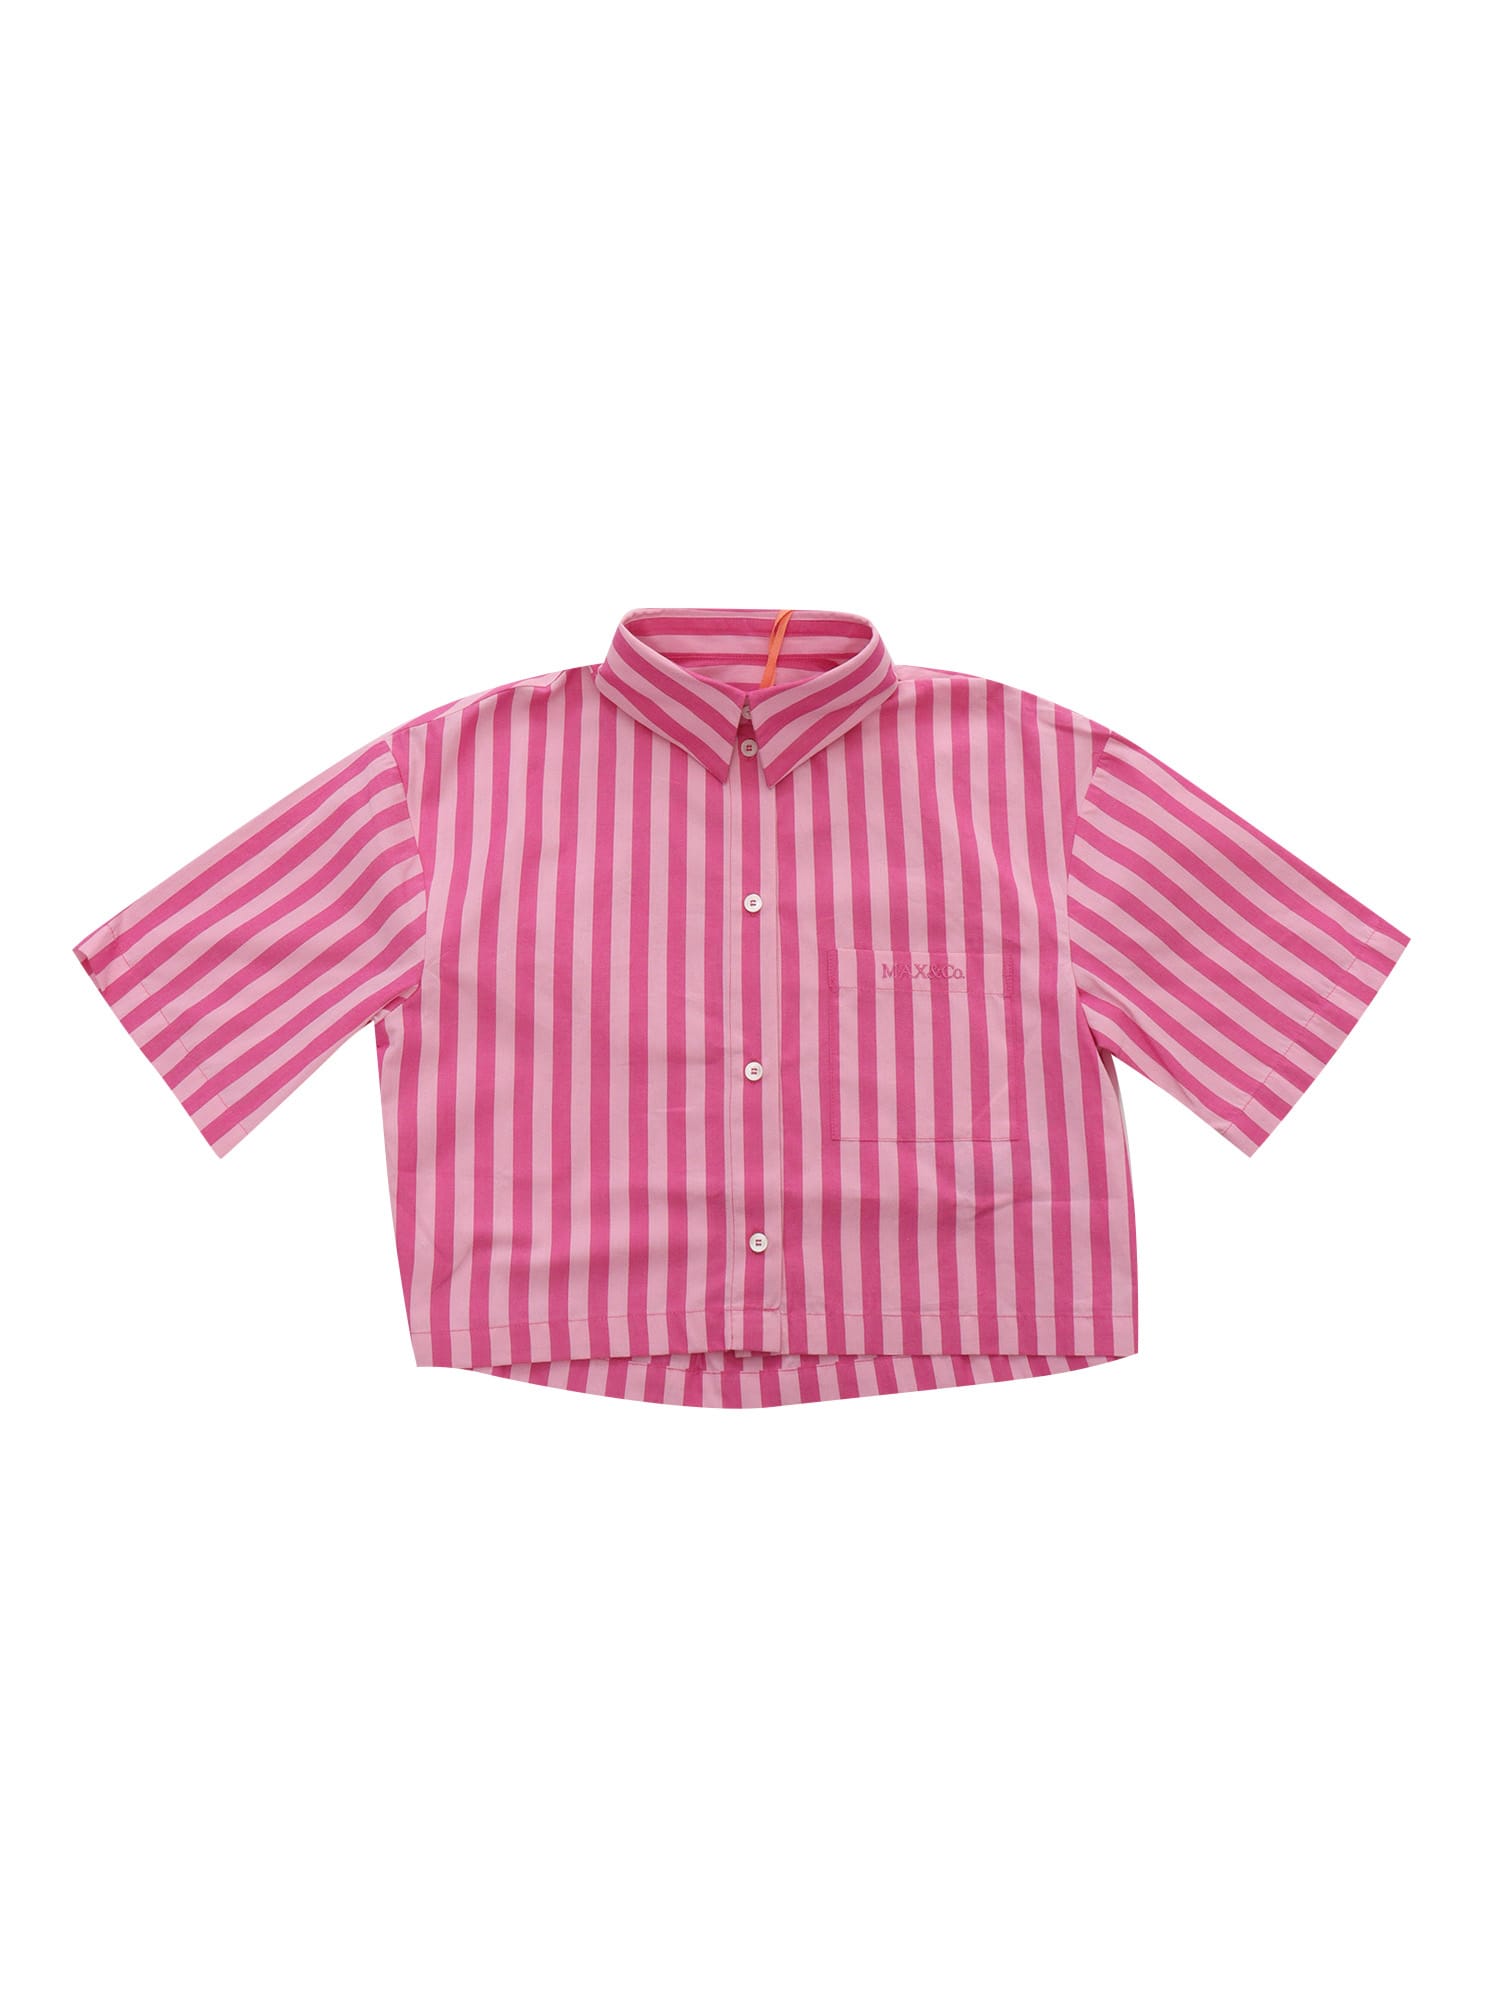 Max&amp;co. Kids' Pink Striped Shirt